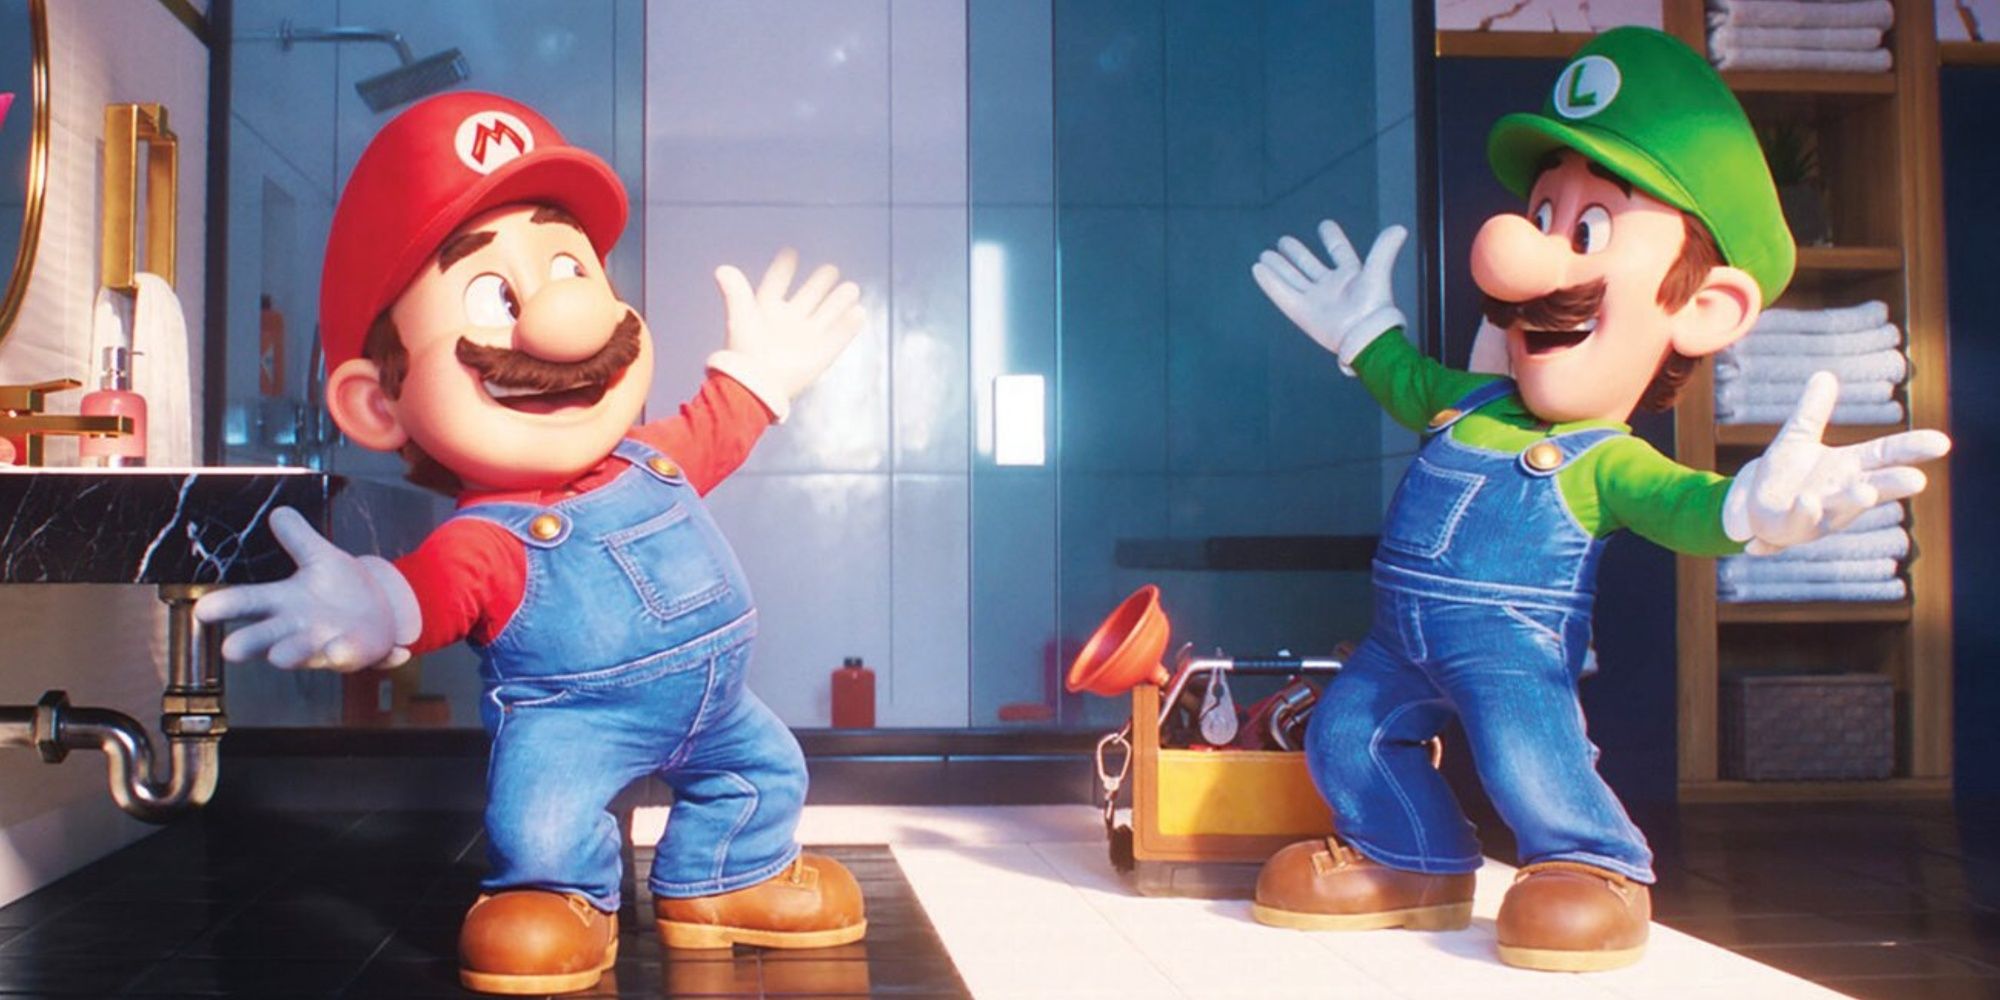 Mario and Luigi about to hug